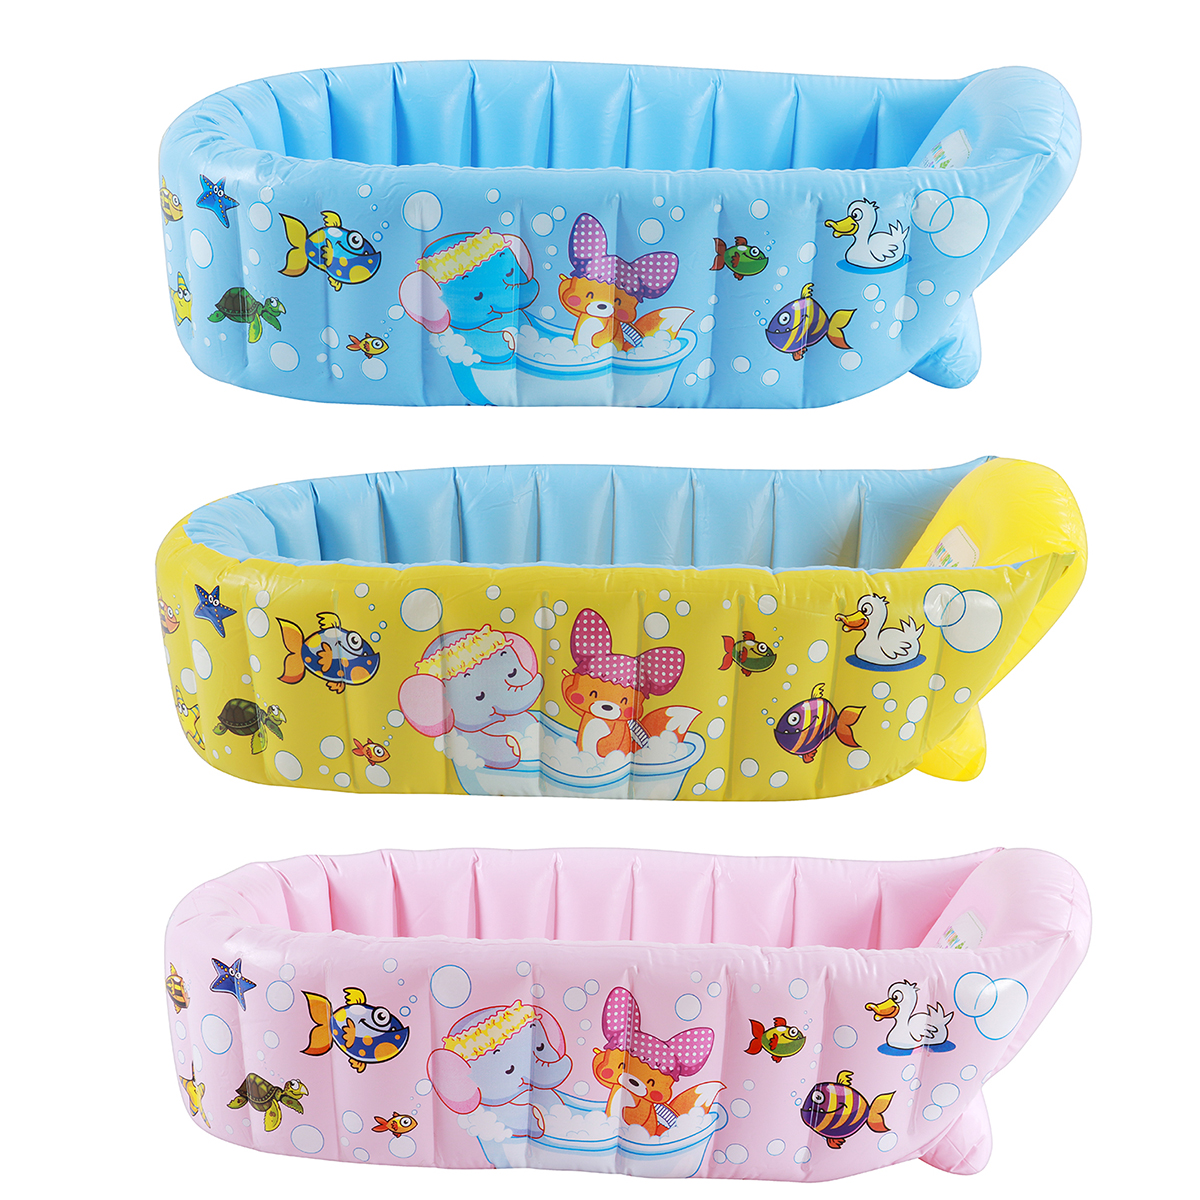 Baby-Inflatable-Bath-Tub-PVC-Swimming-Pool-Shower-Bath-Folding-Kids-Portable-Swimming-Pool-for-0-3-Y-1841741-4